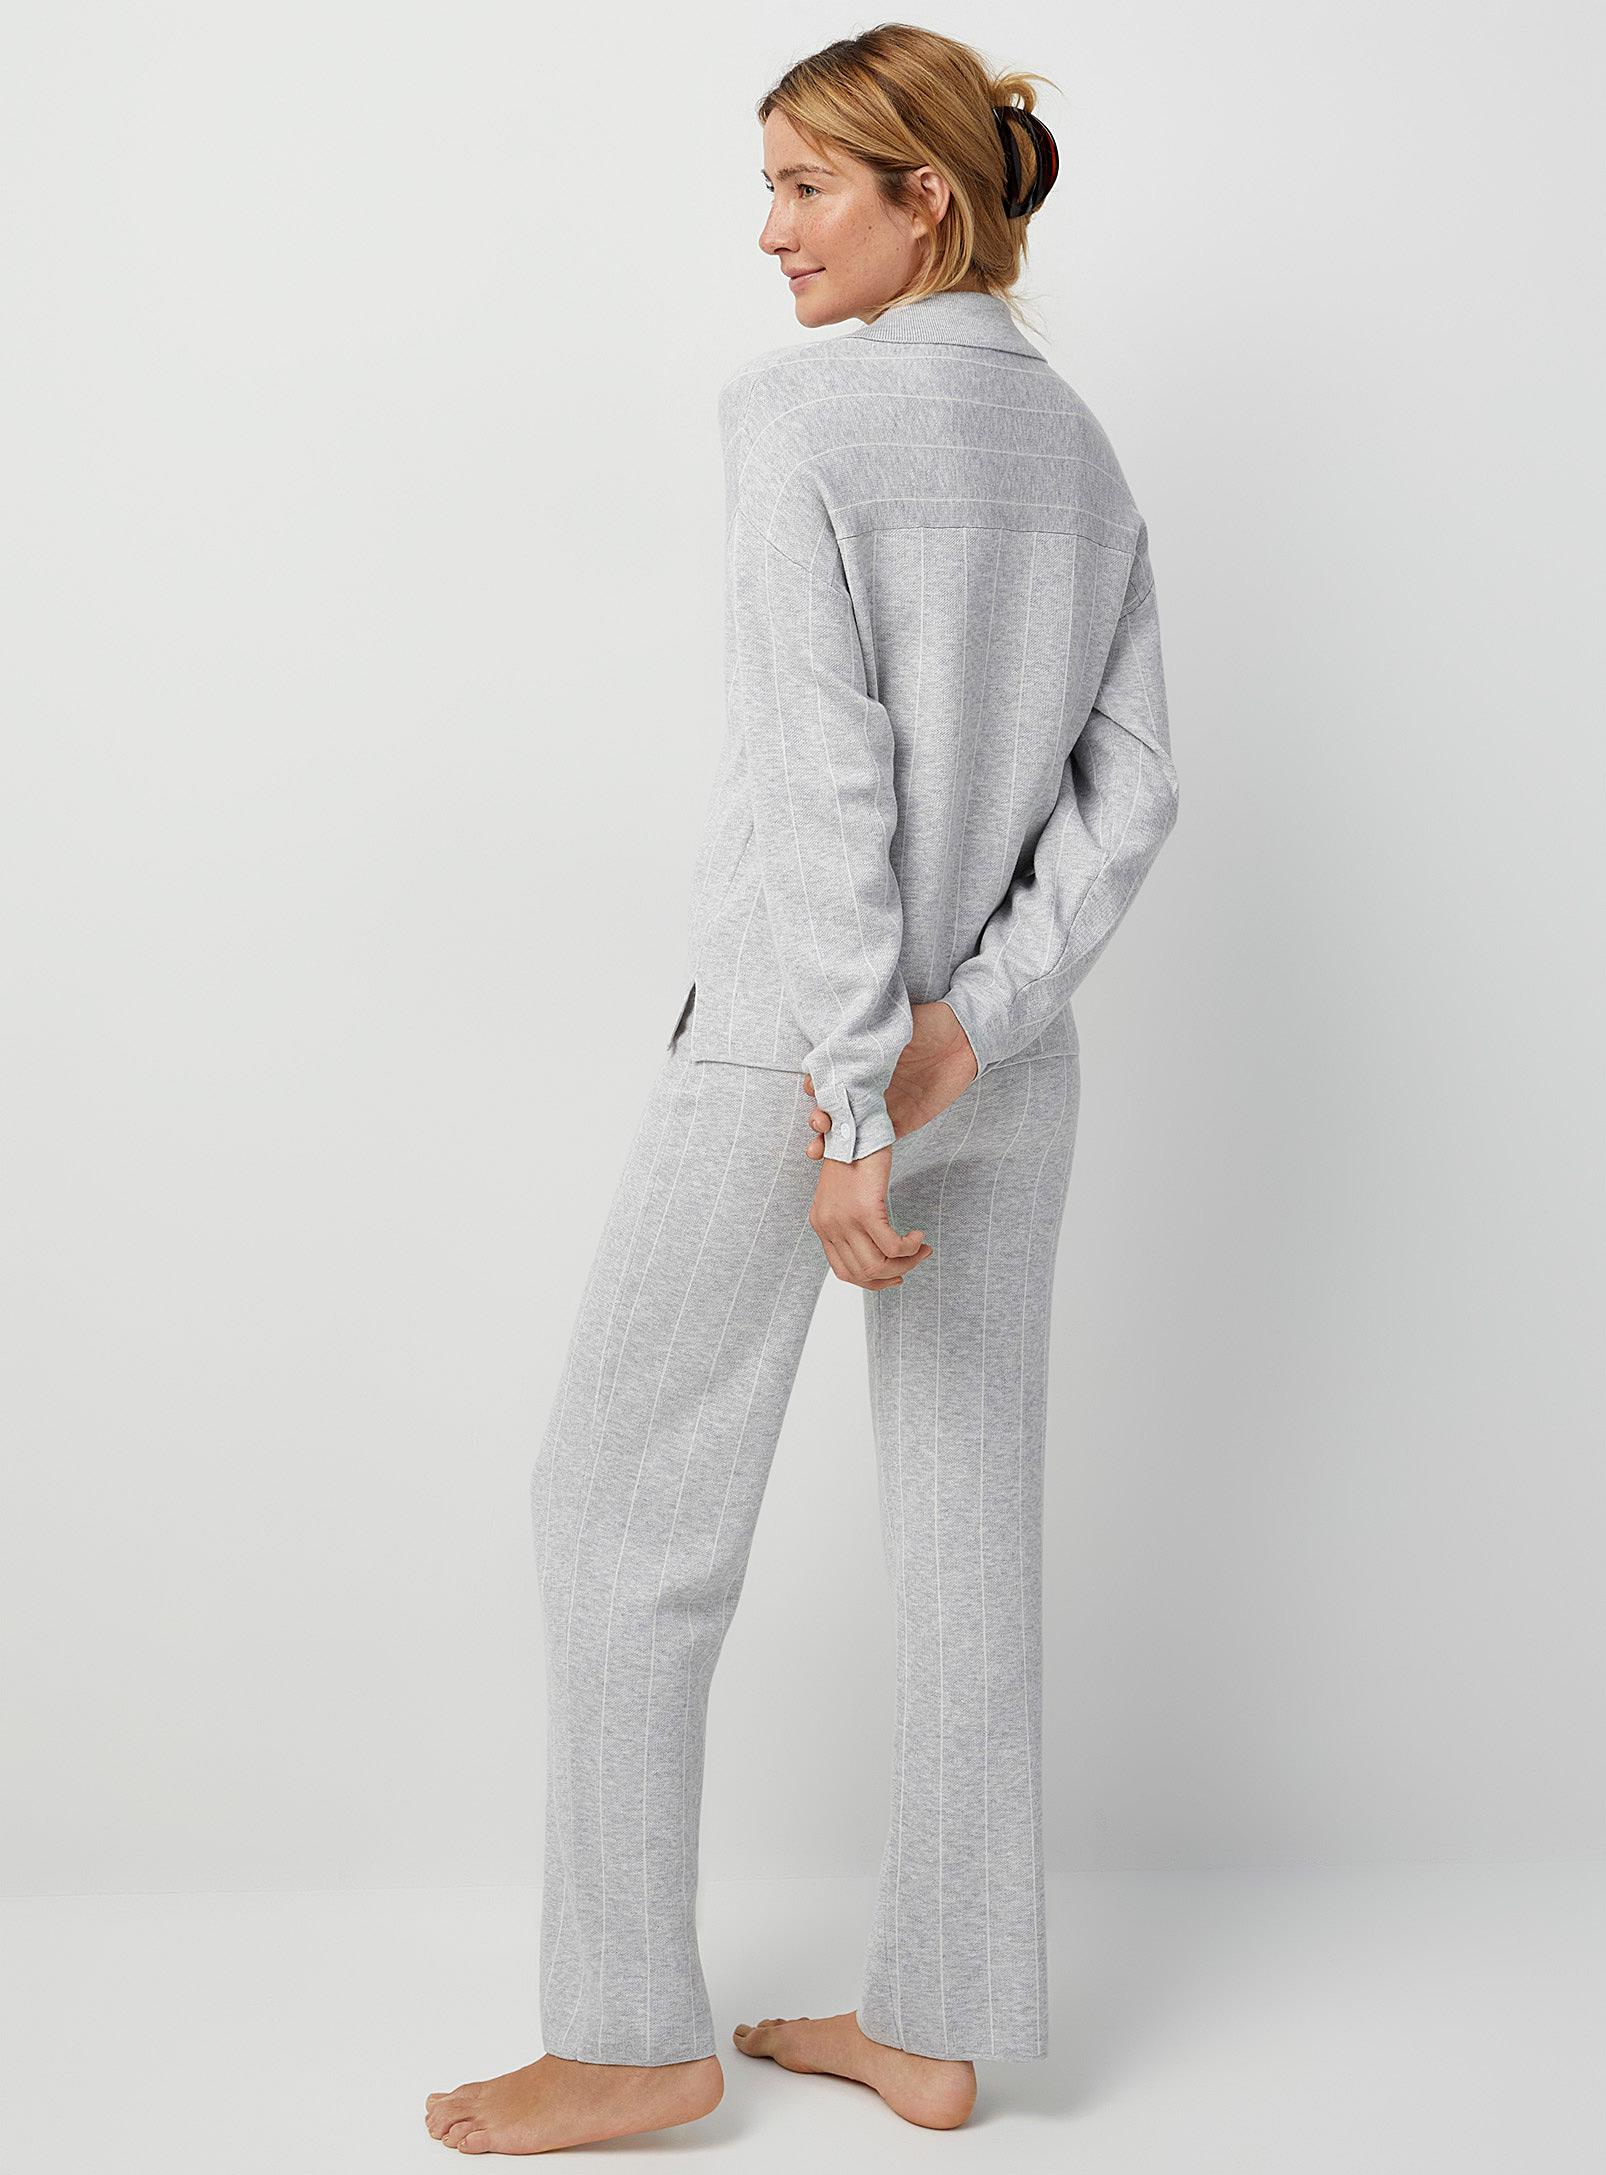 Miiyu Cashmere Blend Knit Pyjama Set in Gray | Lyst